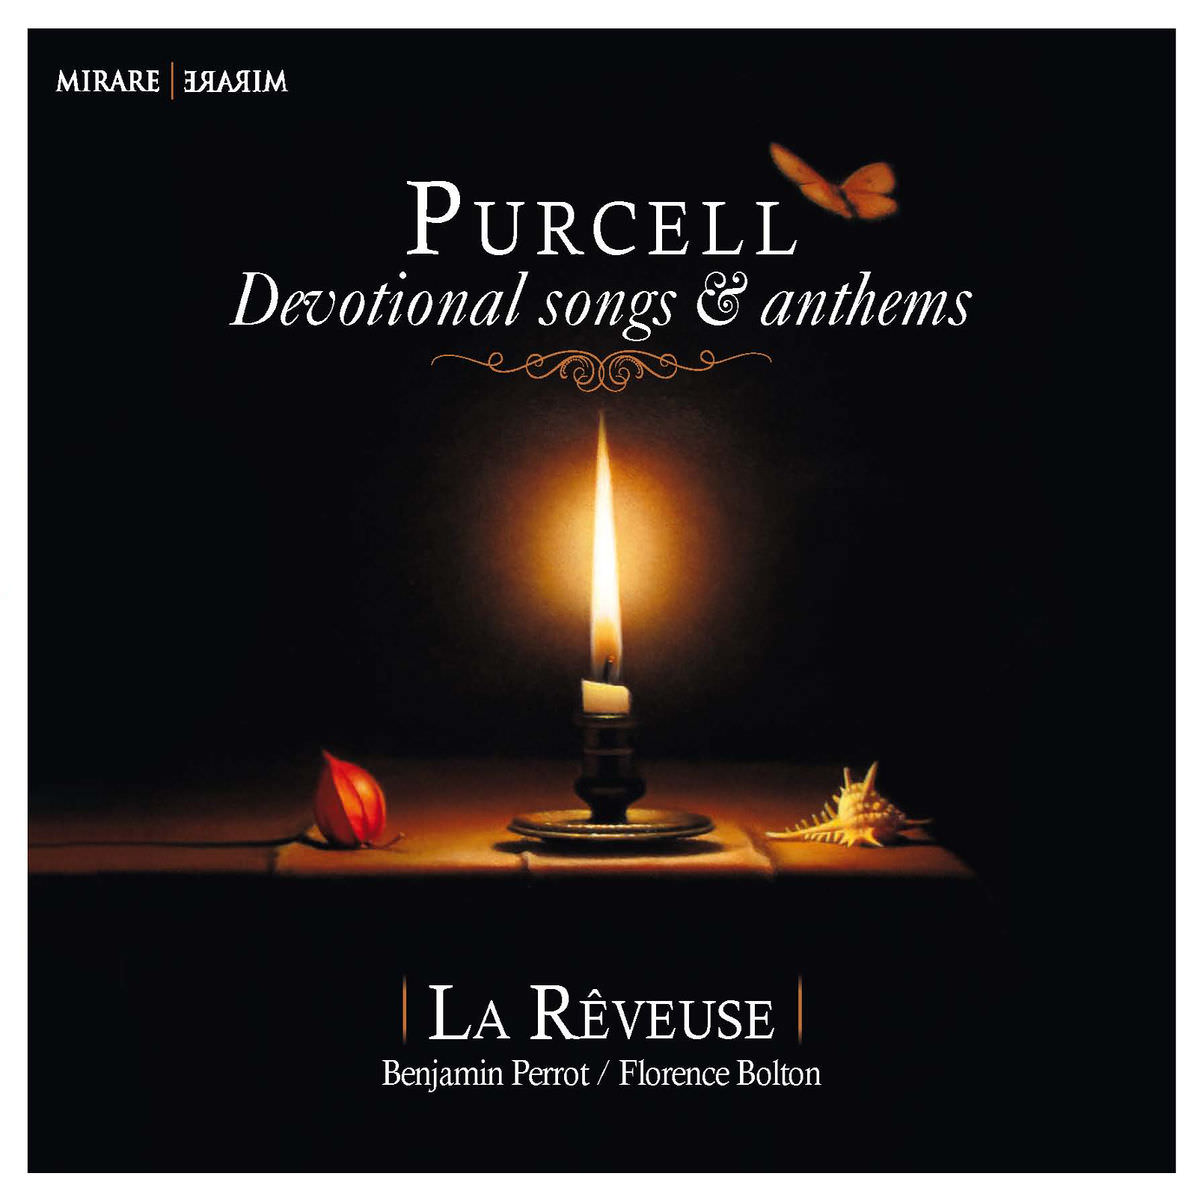 La Reveuse, Benjamin Perrot & Florence Bolton - Purcell: Devotional Songs & Anthems (2015) [FLAC 24bit/96kHz]